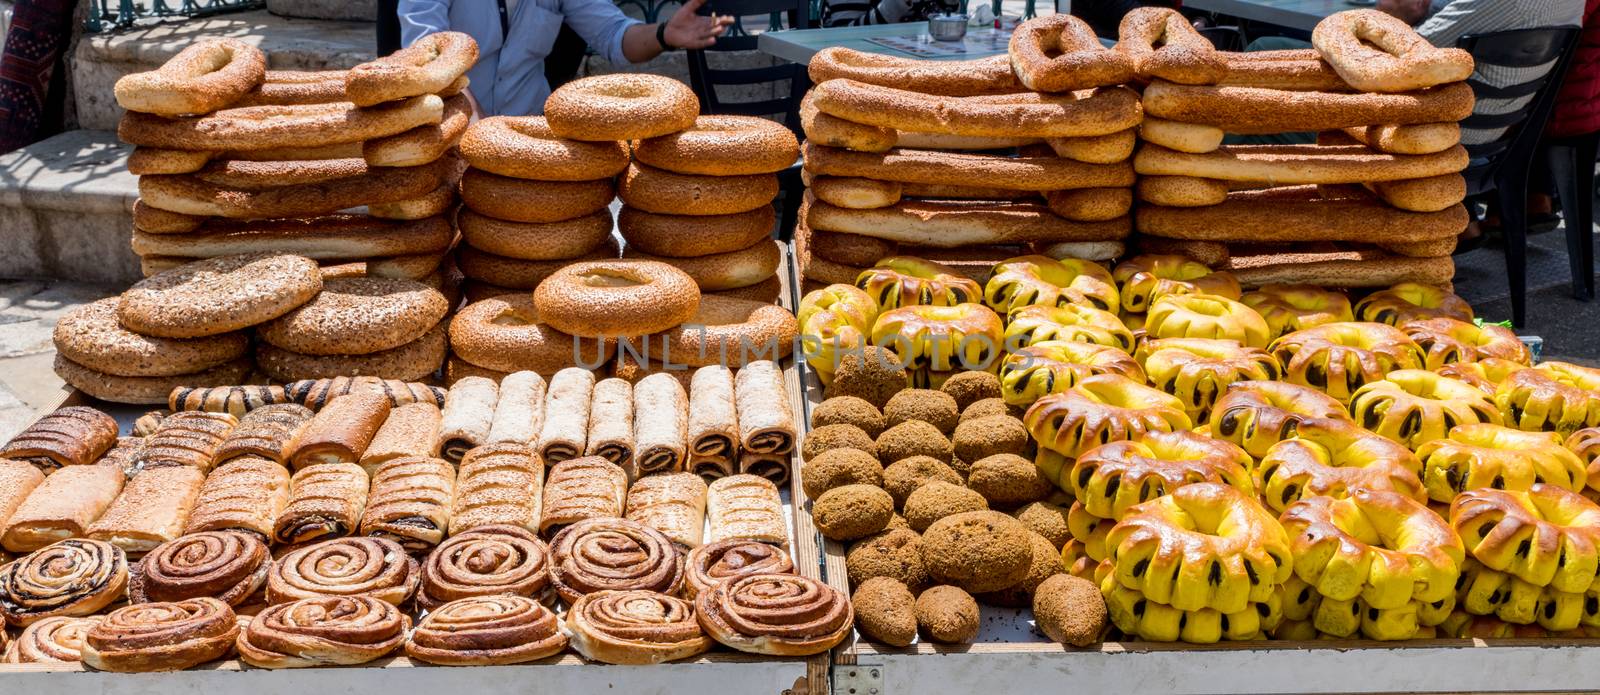 Bread Counter Mahane Yehuda Market Jerusalem by compuinfoto